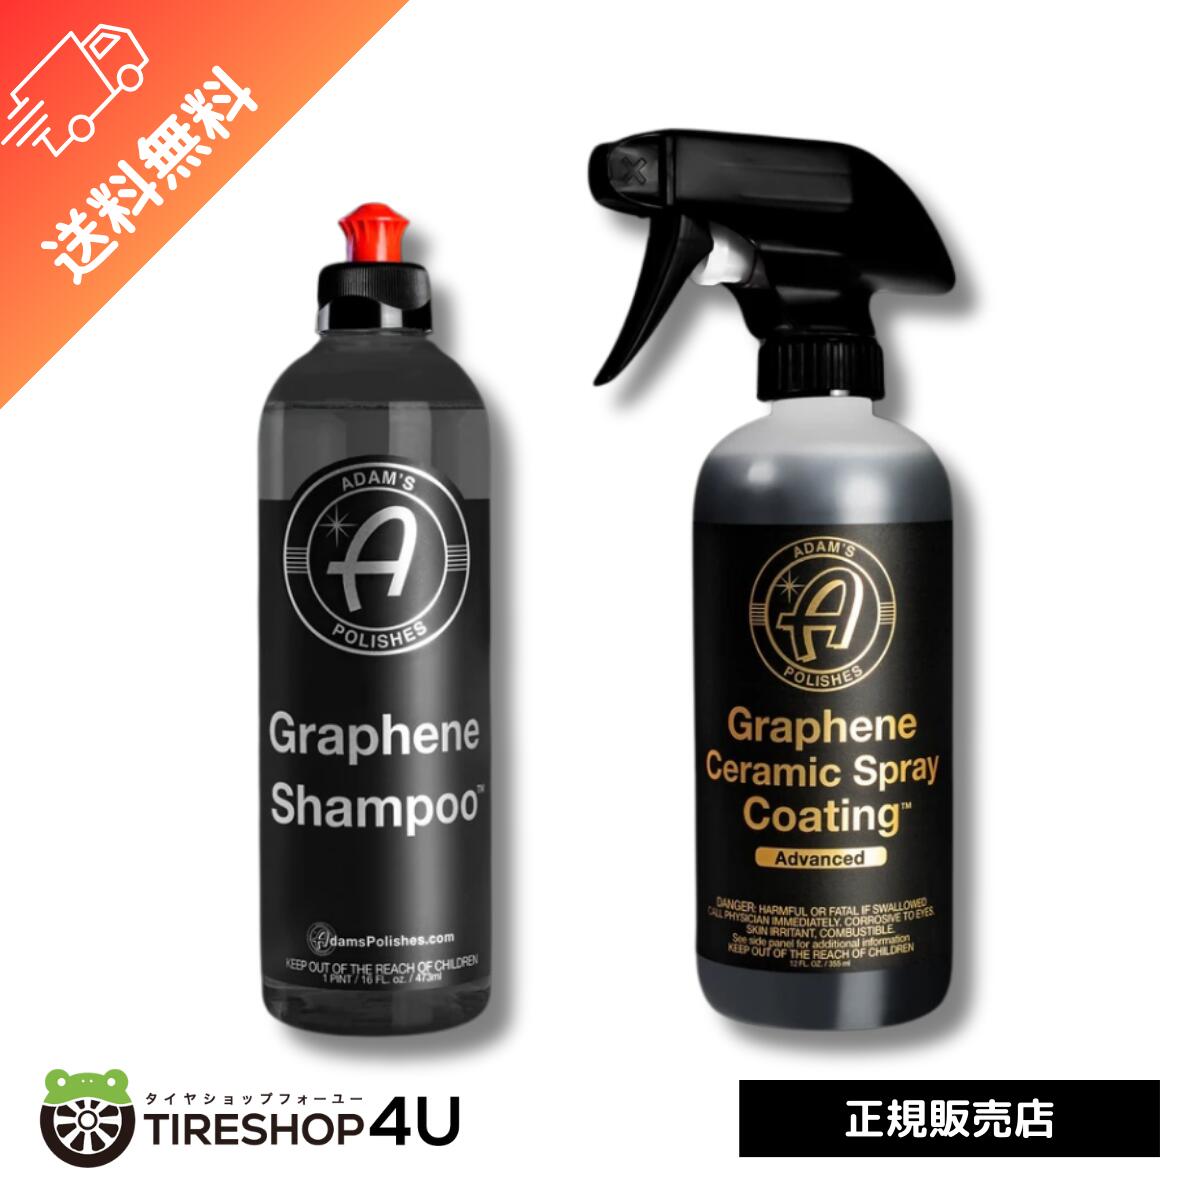 Adam's Polishes Graphene Ceramic Spray Coating Advanced  Graphene Shampoo Zbg OtF Z~bN R[eBO Vv[ A_X|bV    55001060006-A  ԕ oCN ] ~J